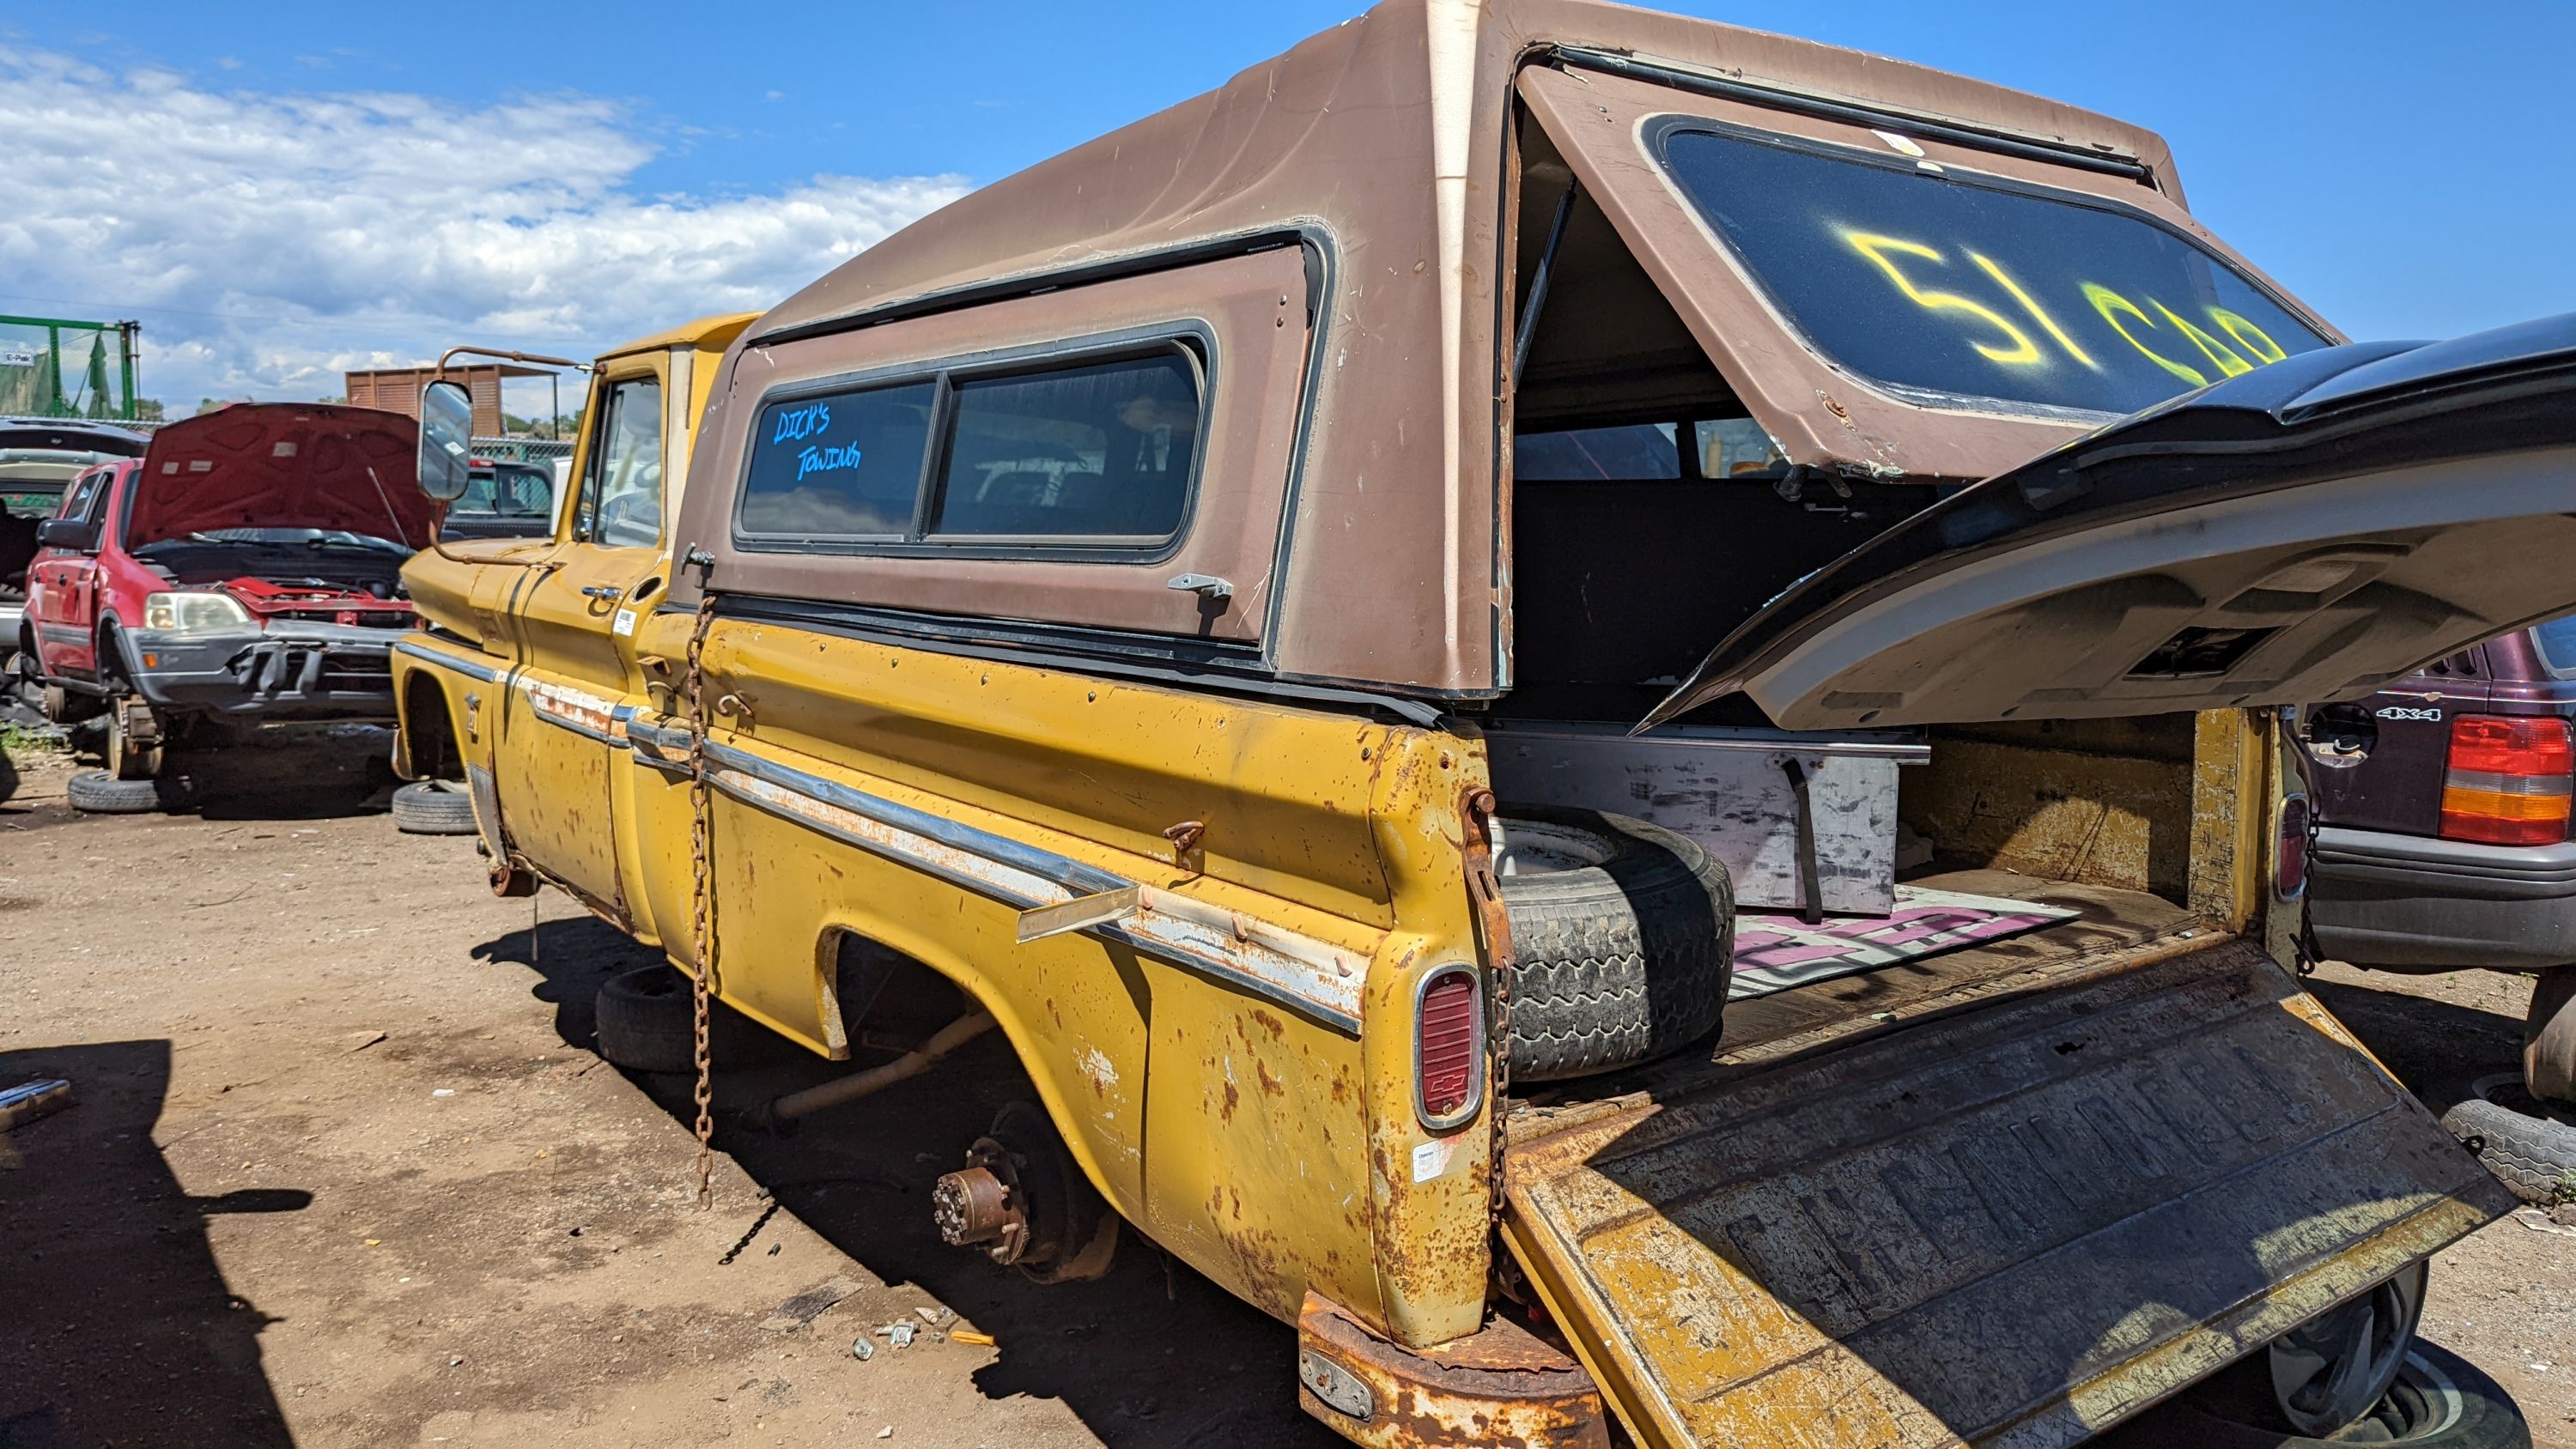 66 - 1964 Chevrolet C20 Pickup in Colorado junkyard - Photo by Murilee Martin